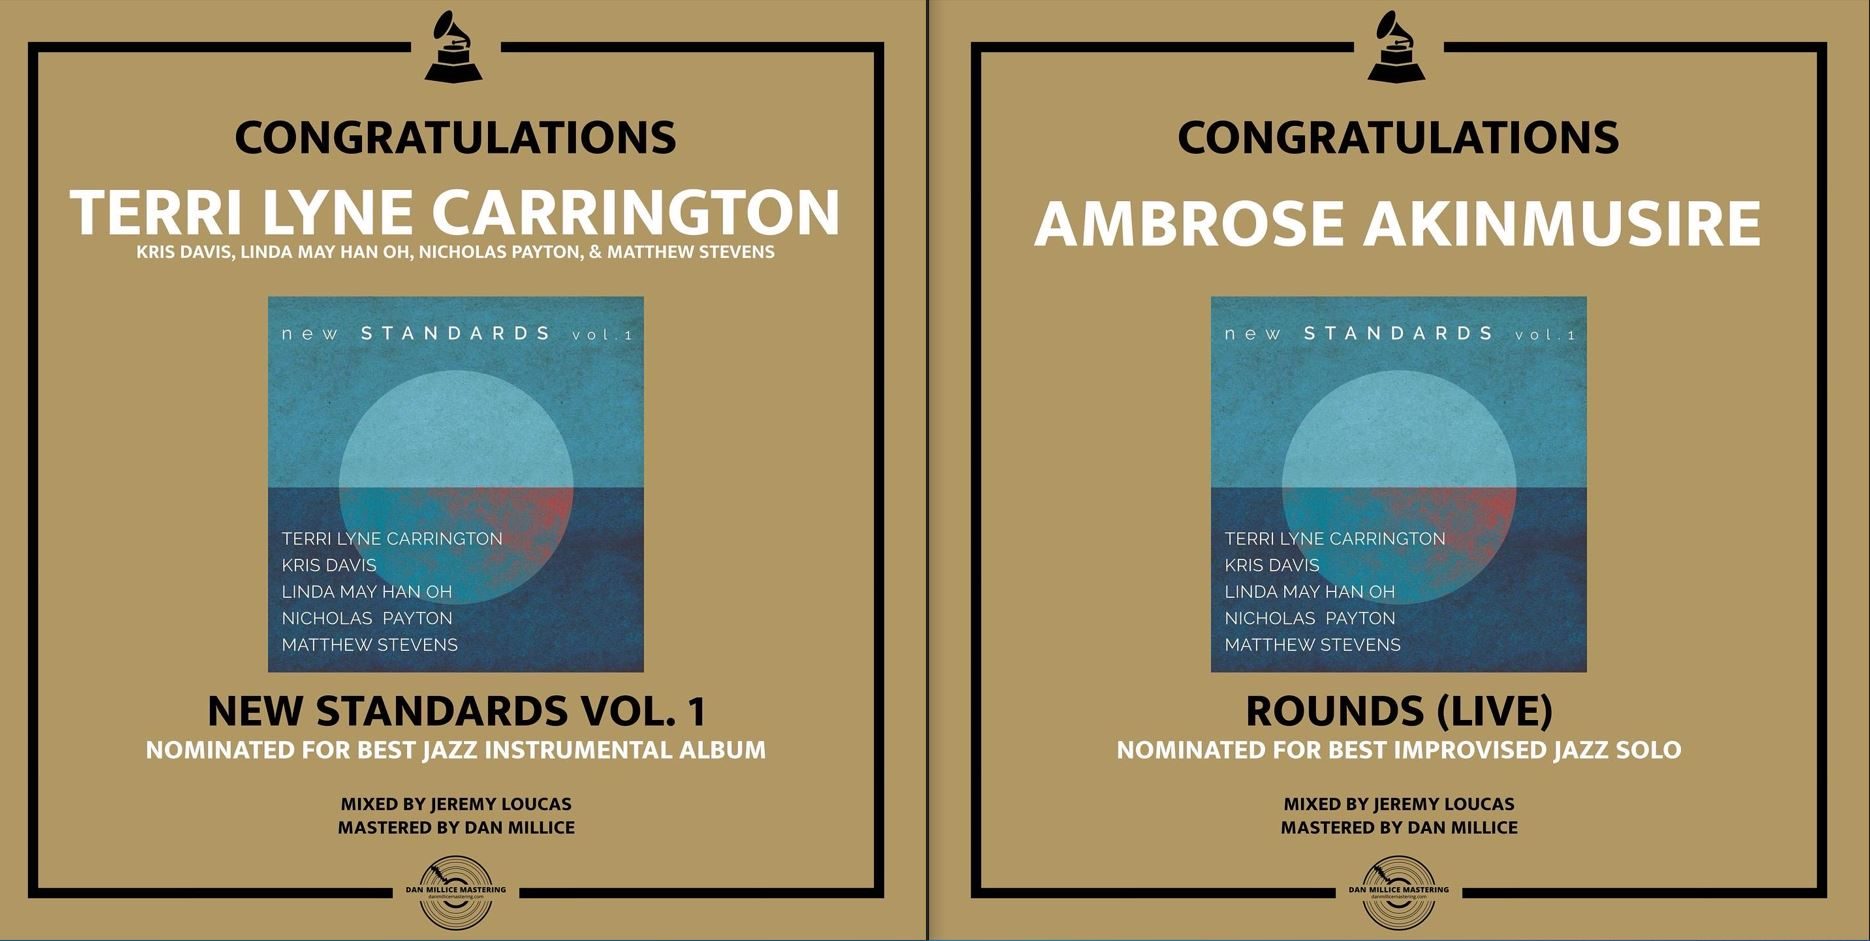 Dan Millice Mastering - 65th Grammy Nominations - Terri Lyne Carrington - New Standards Vol. 1 - Best Jazz Instrumental Album and Best Jazz Improvised Solo